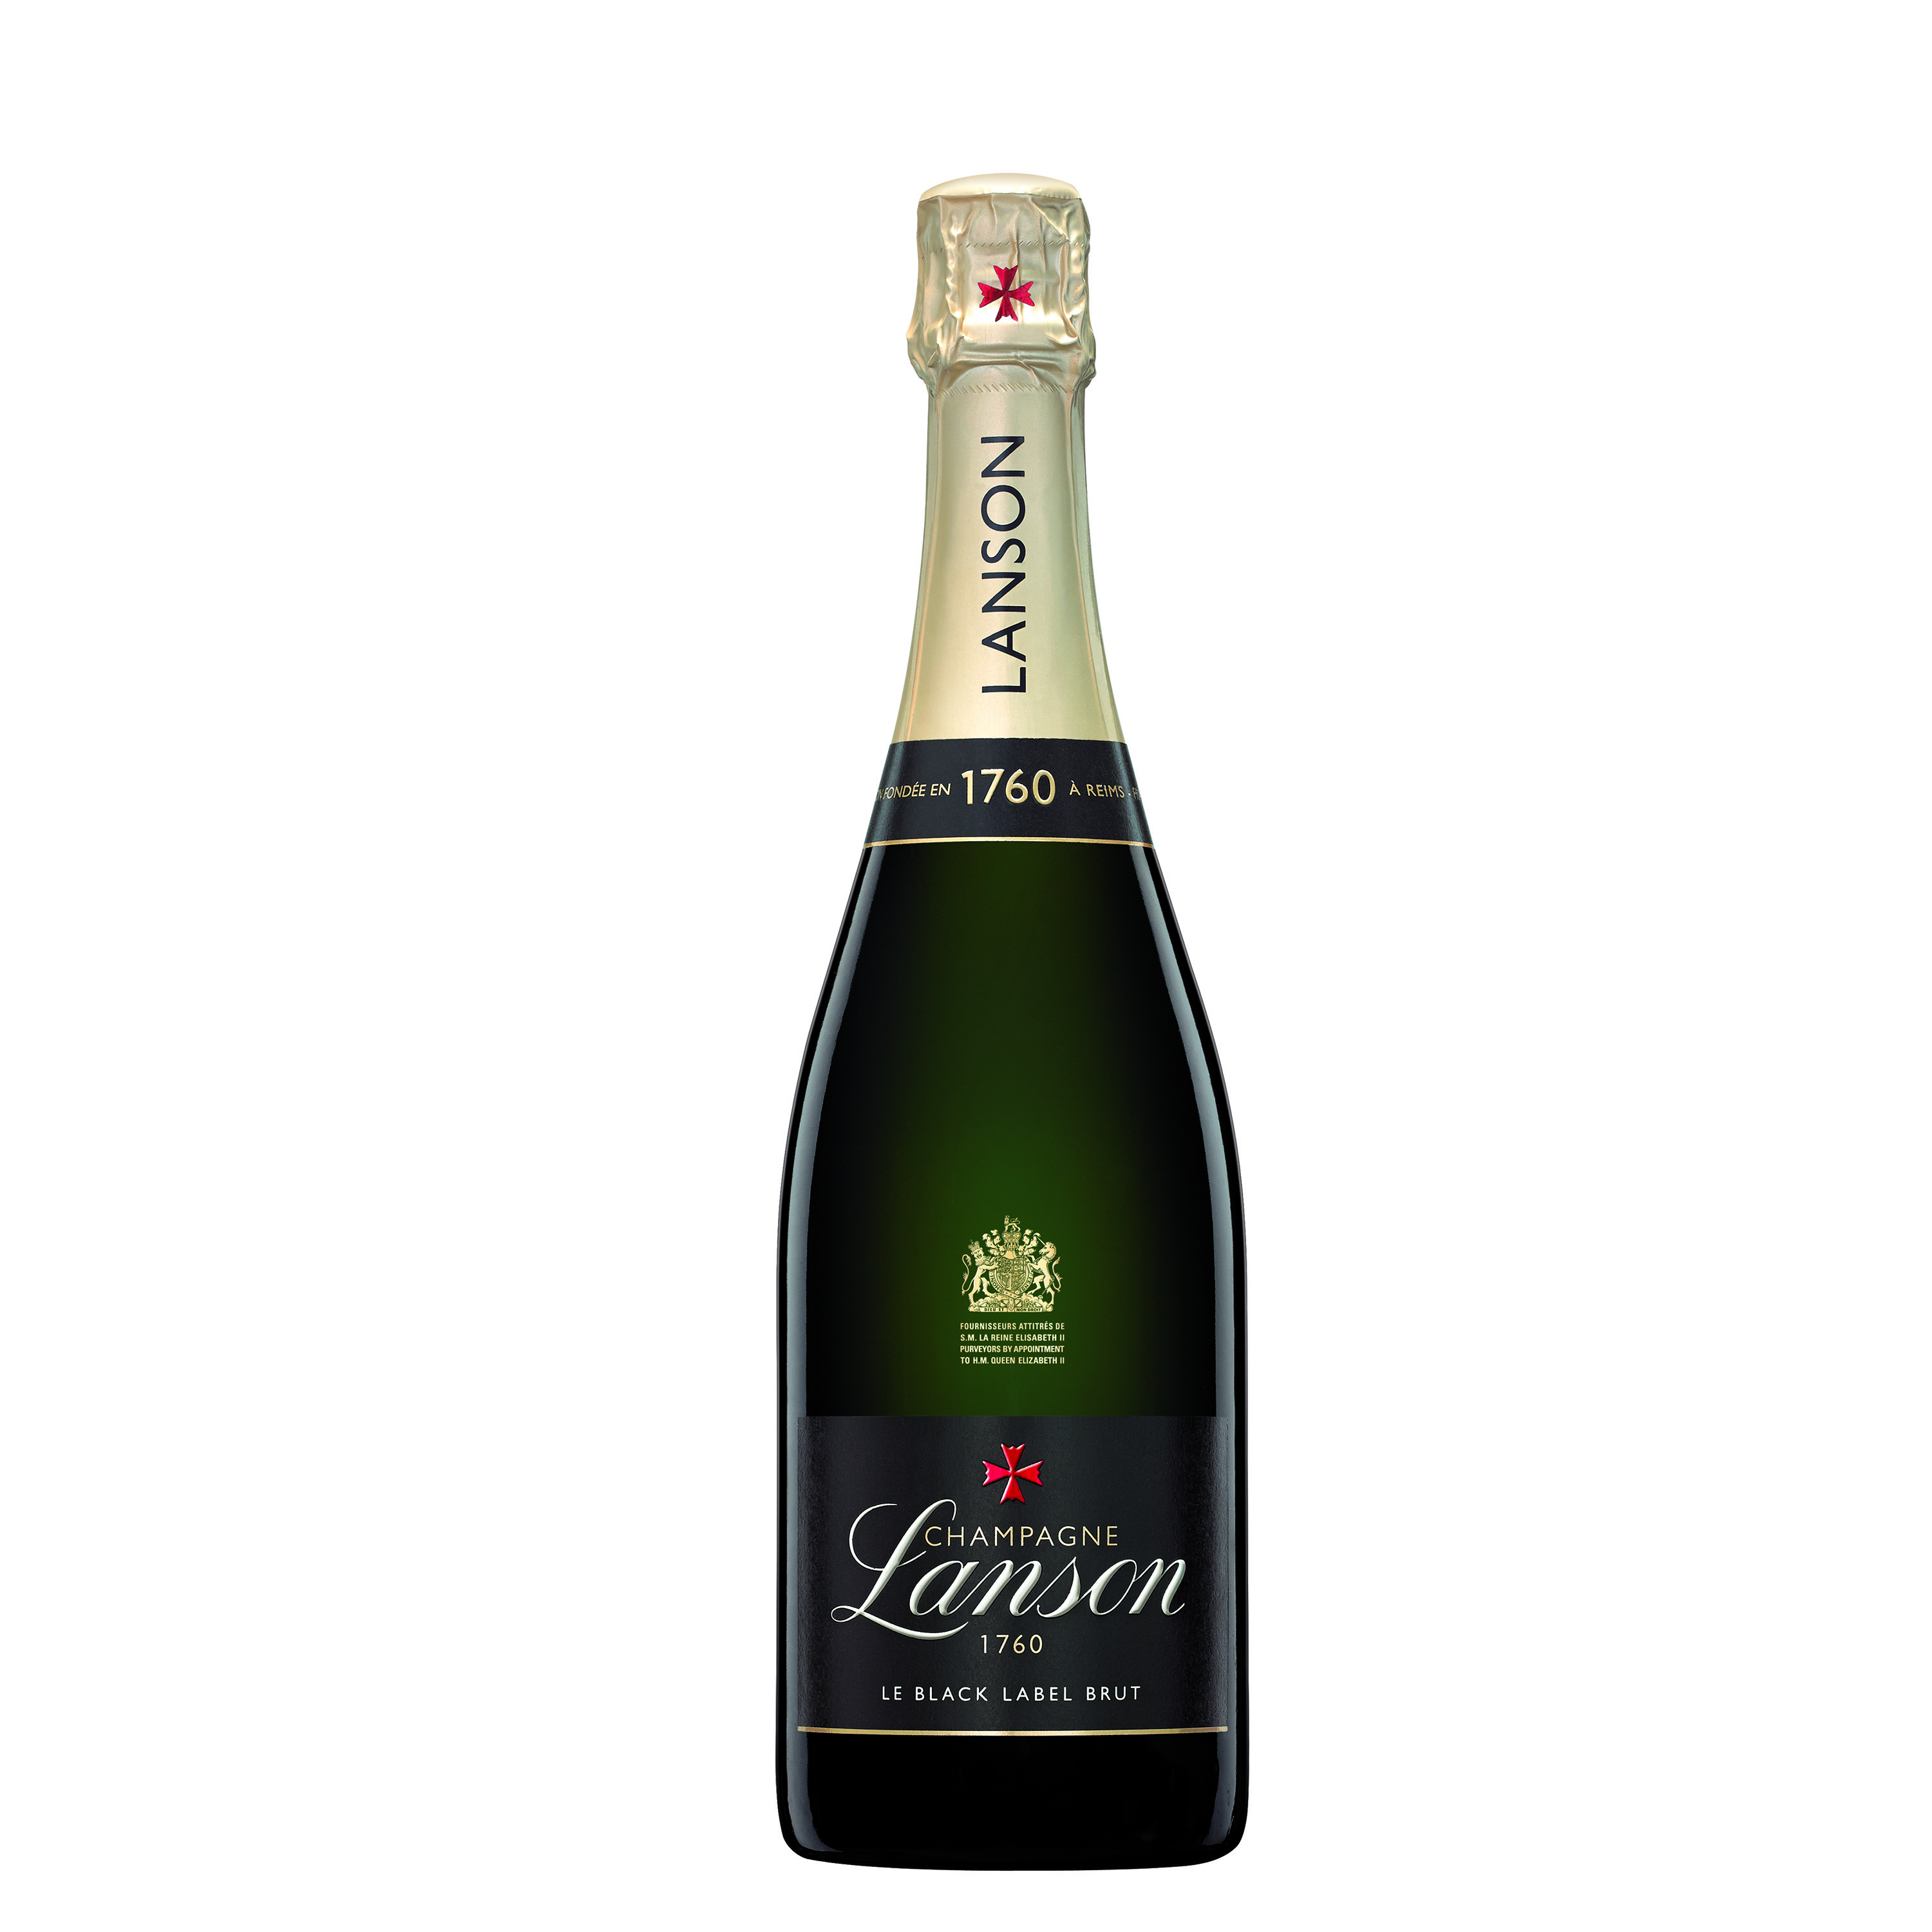 Secondery Lanson-Le-Black-Label-75cl-bottle.jpg